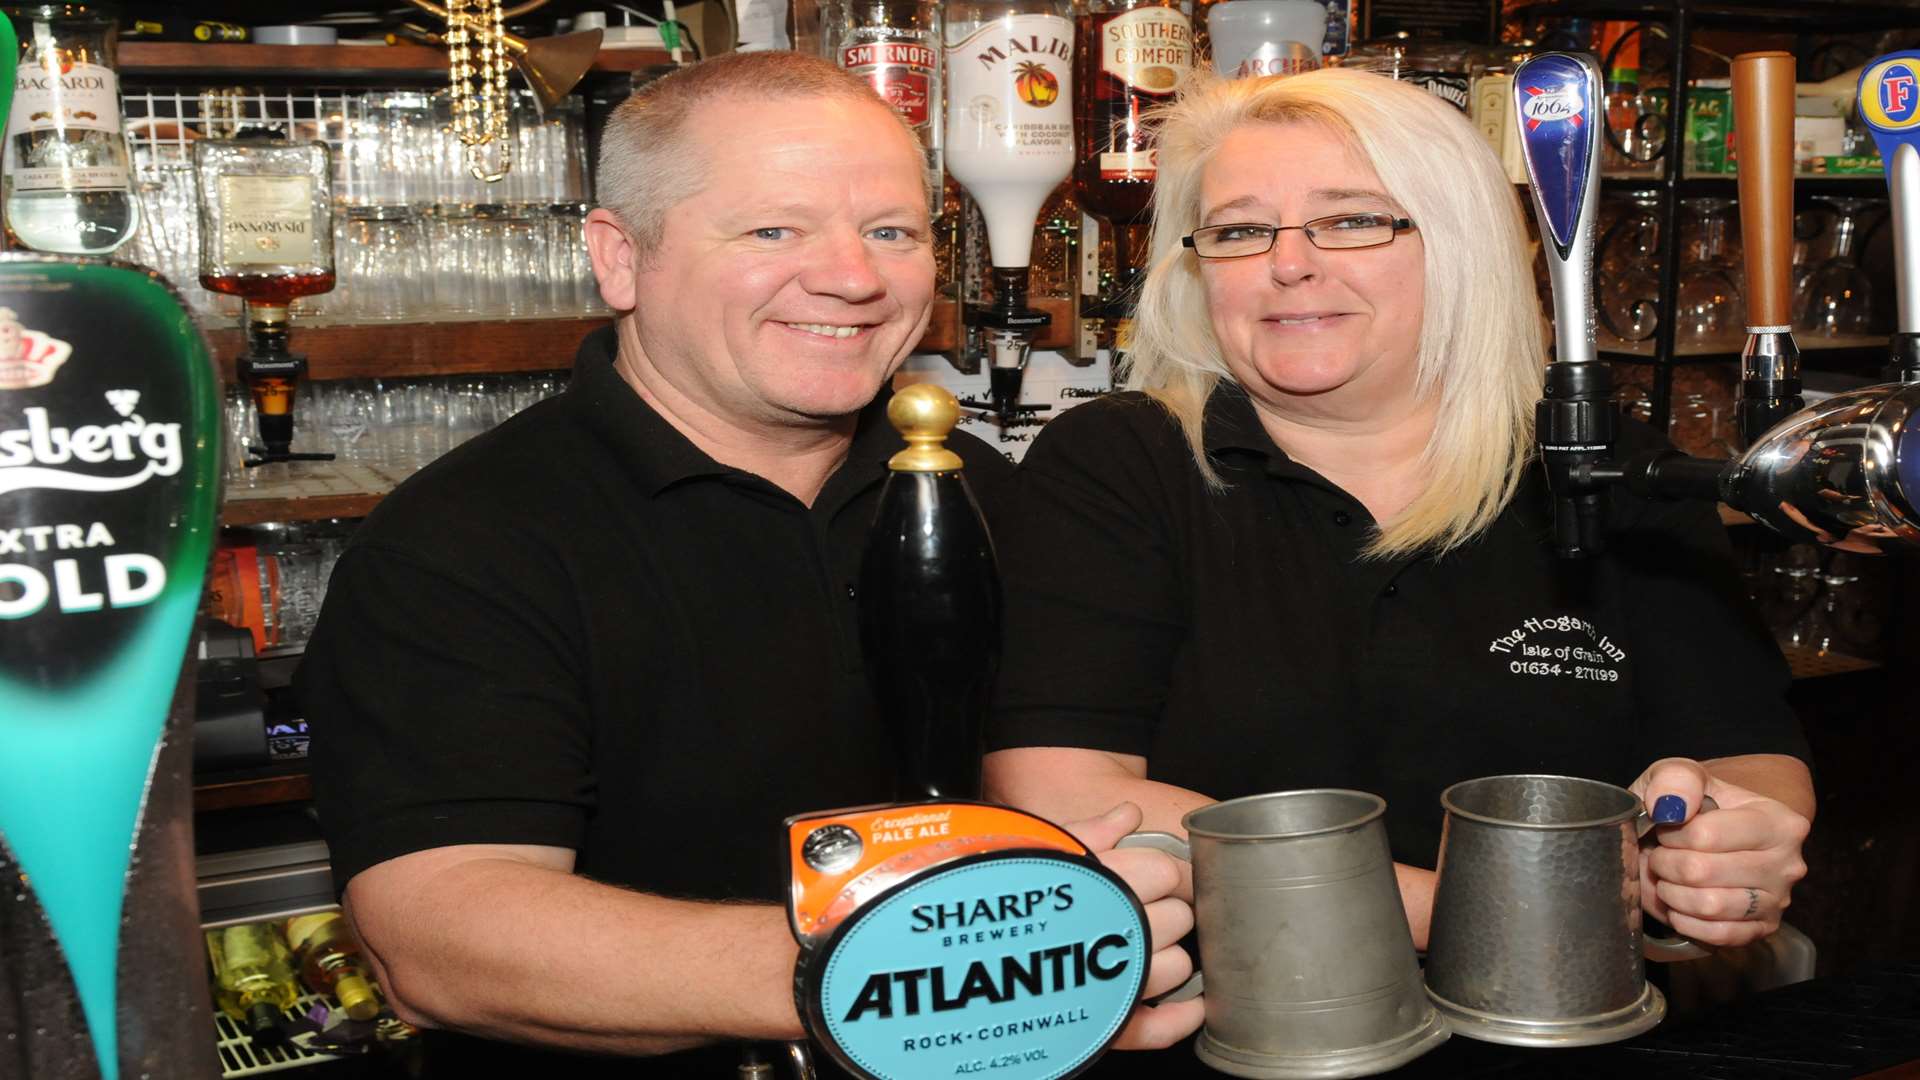 Debbie and Paul Ramsey at The Hogarth Inn on the Isle of Grain. Picture: Steve Crispe